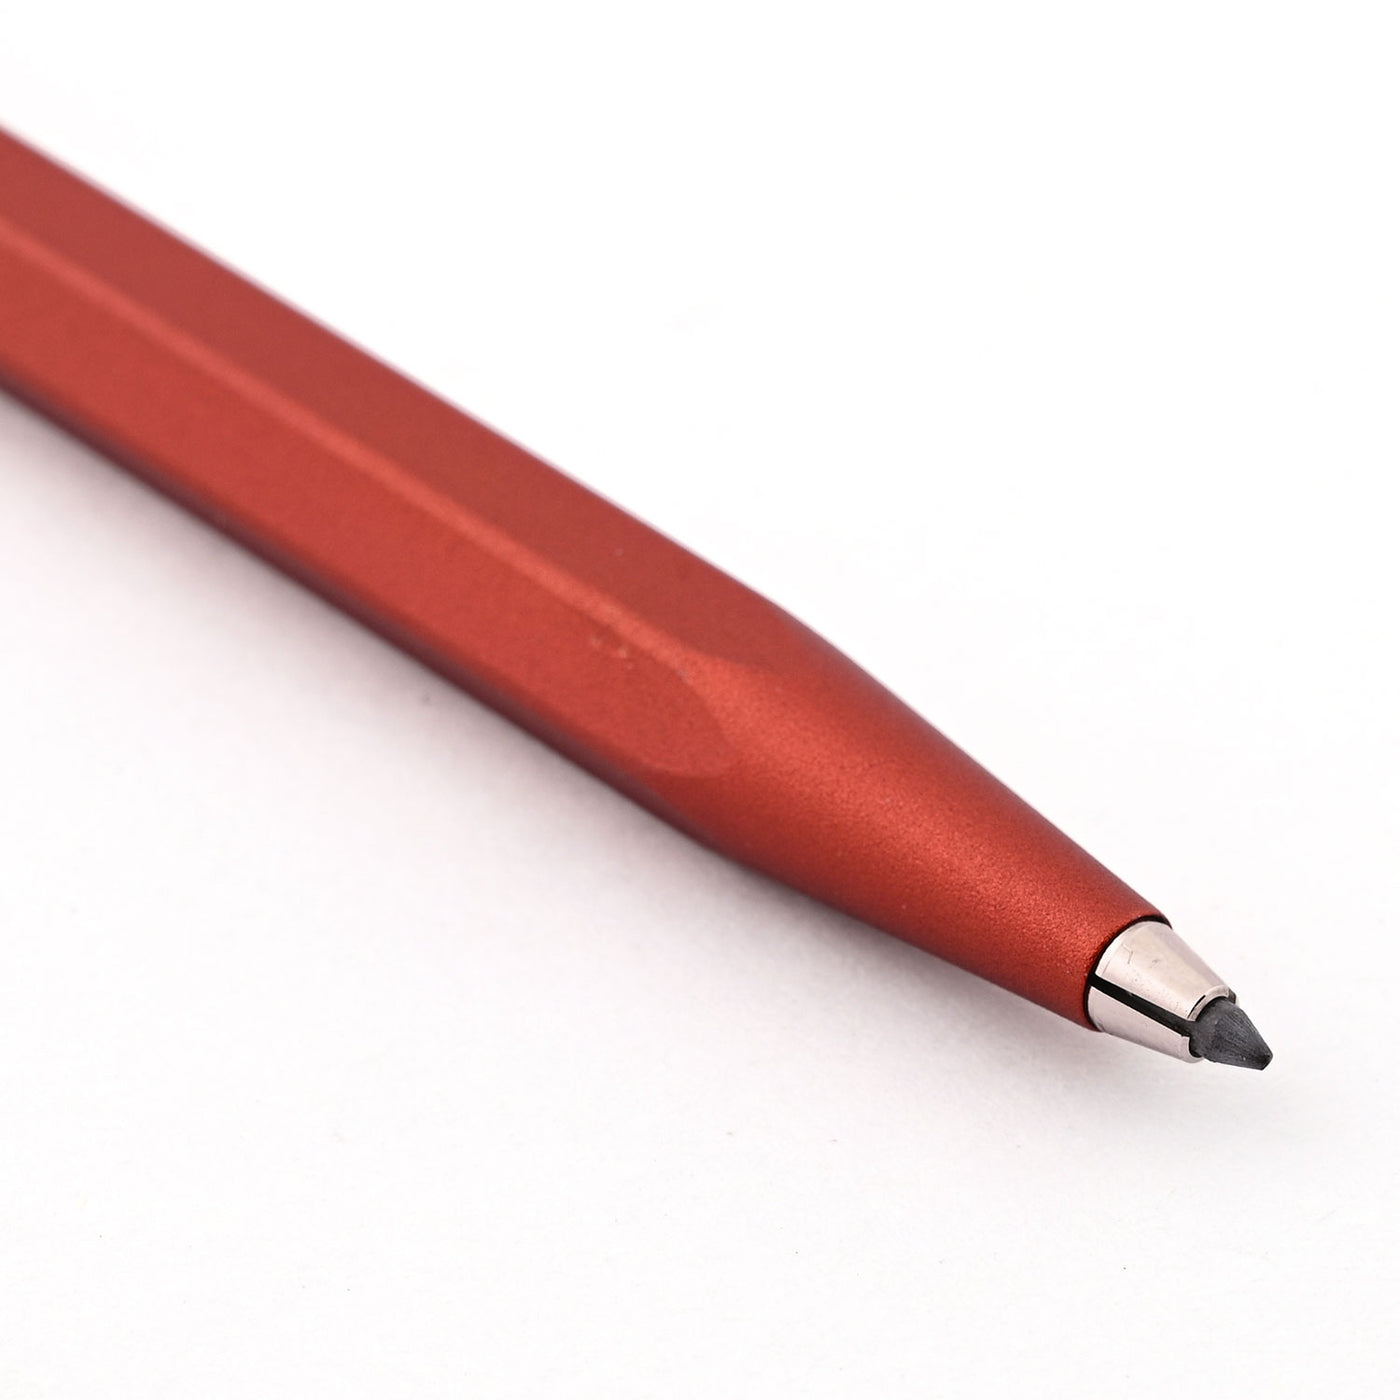 Caran d'Ache Fix Pencil Nespresso 2mm Mechanical Pencil - Orange (Limited Edition) 4